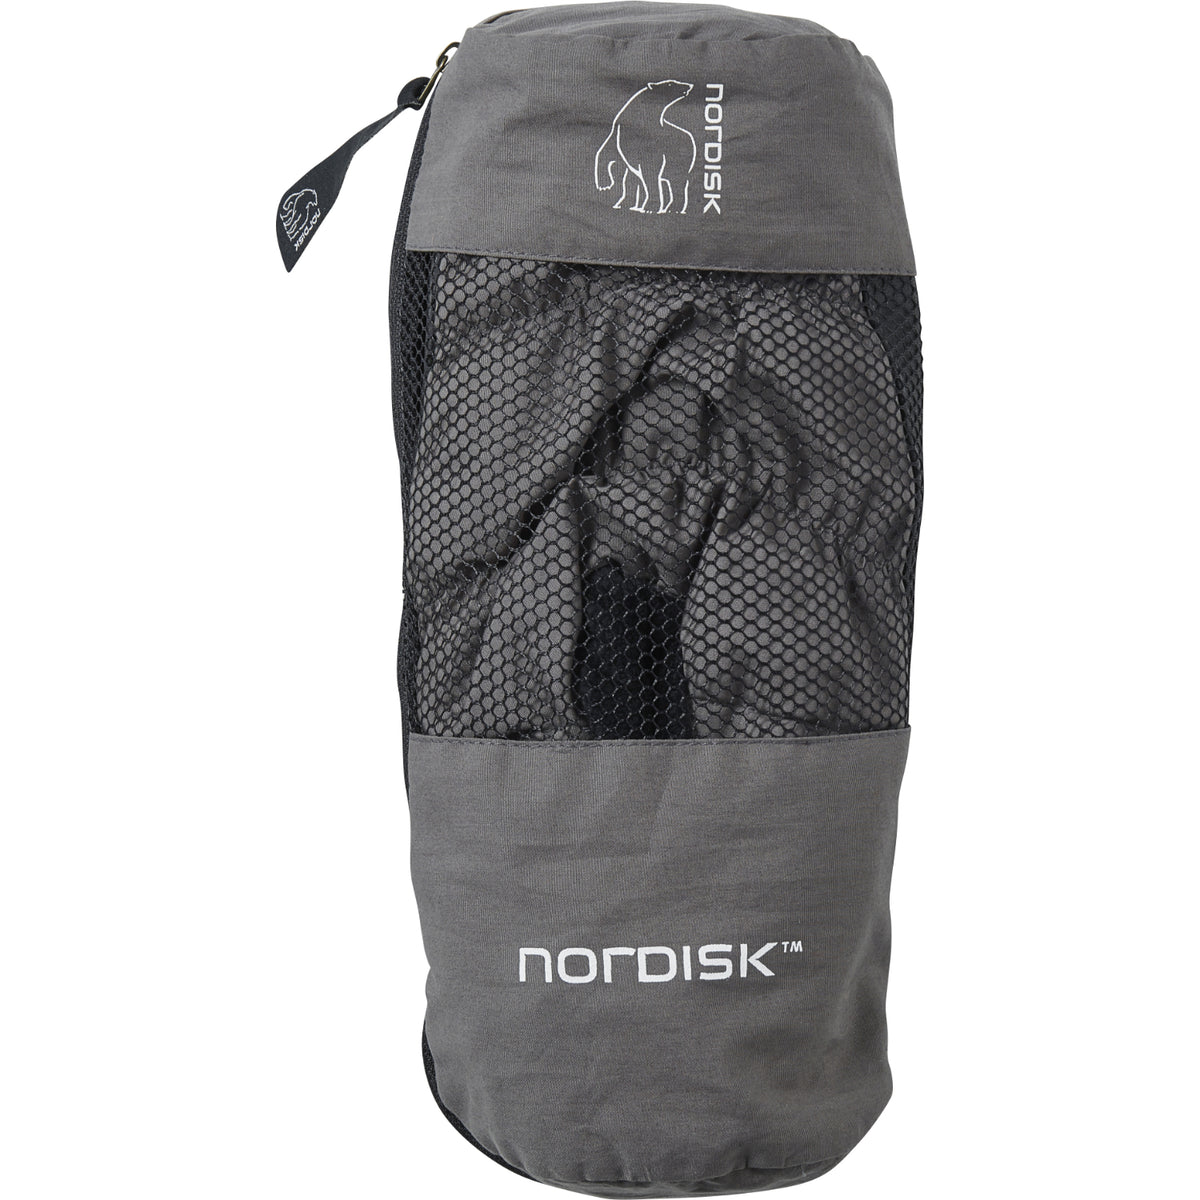 Nordisk Hermod Down Shoe in grey inside storage bag